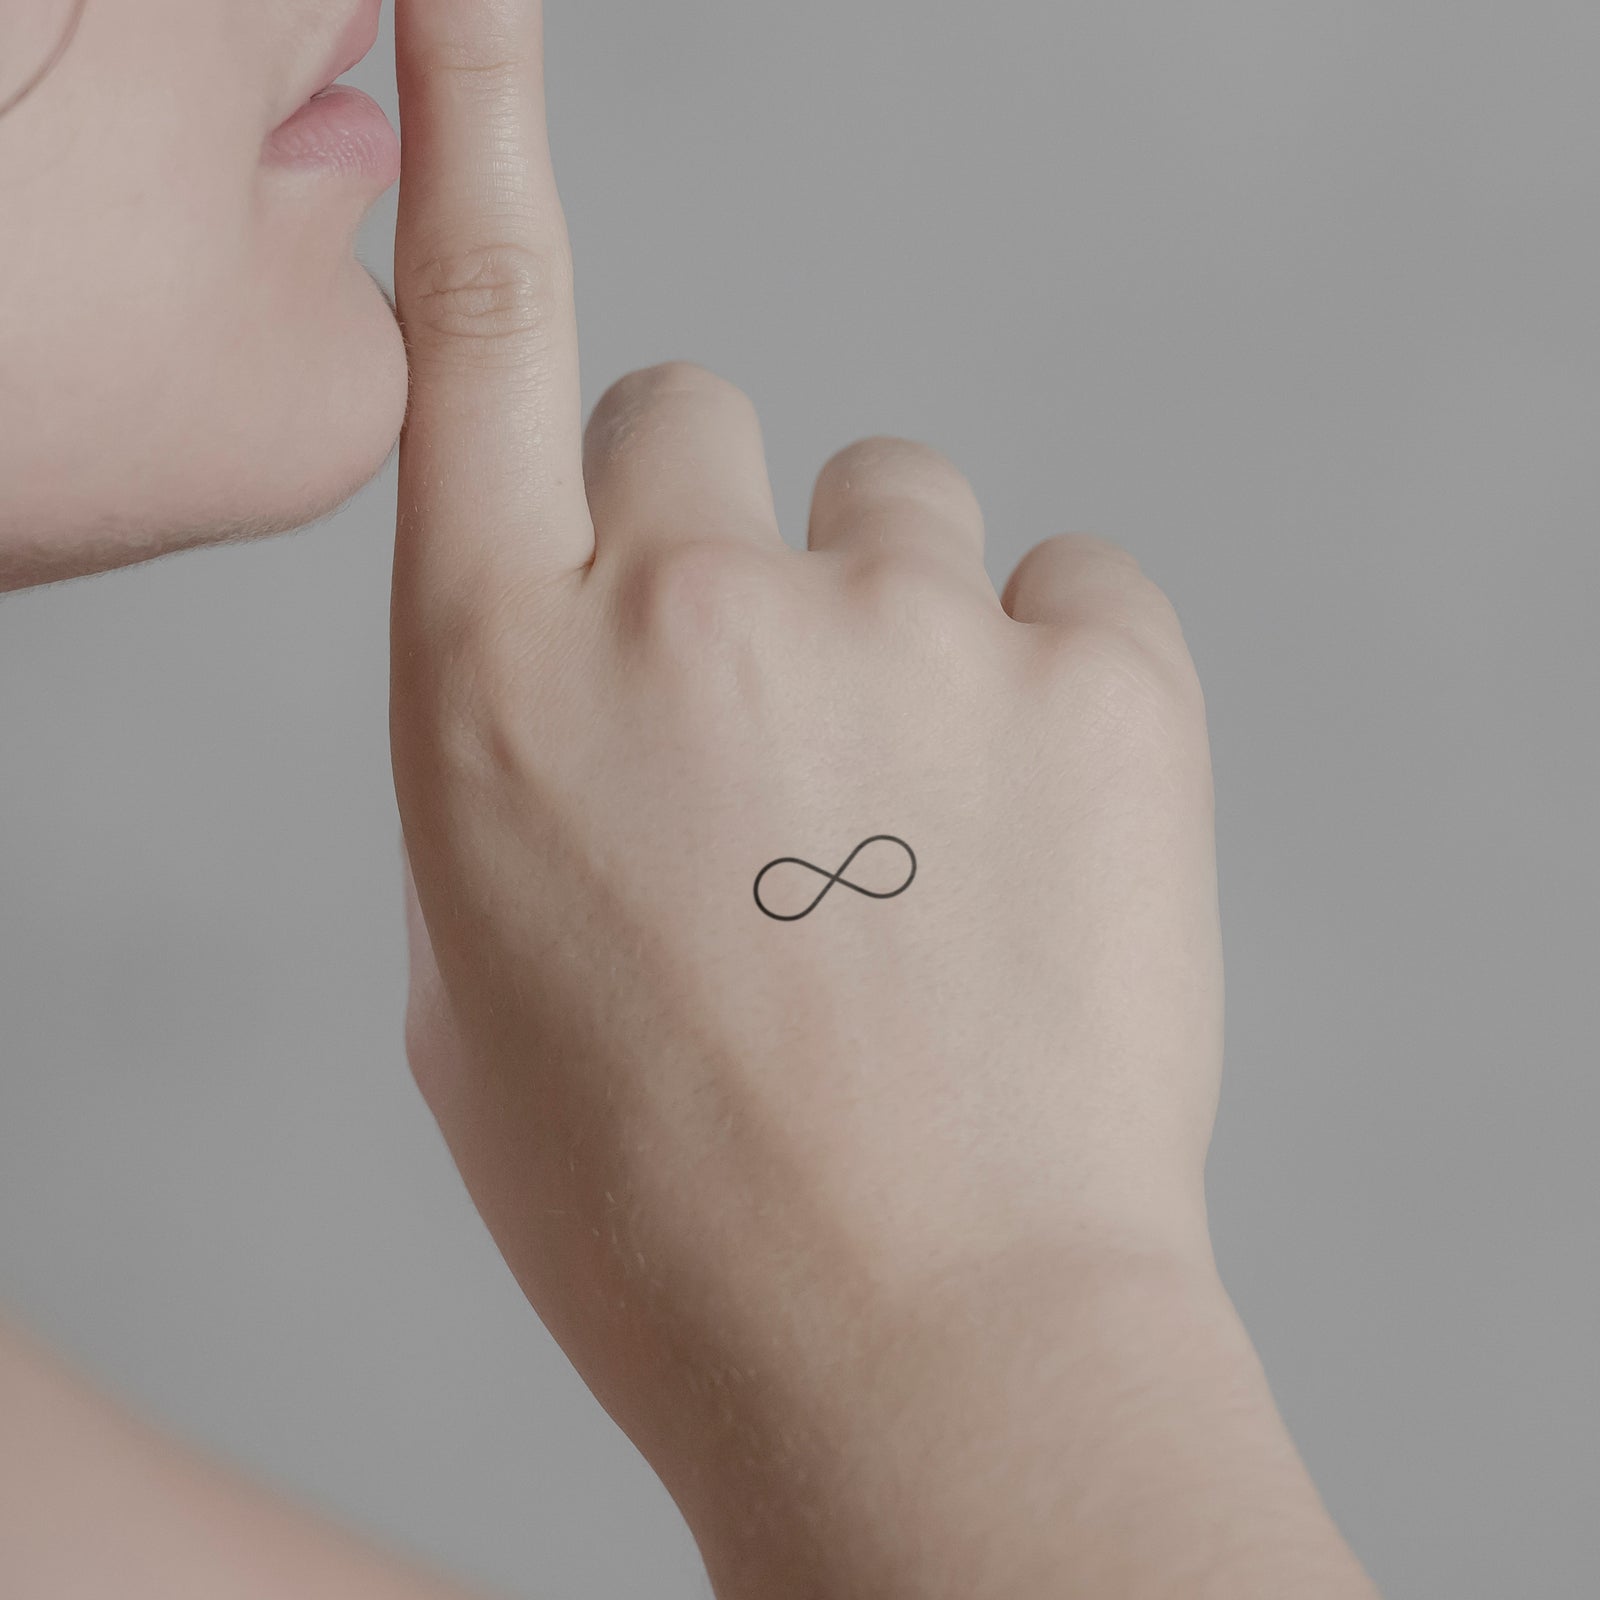 Wrist Infinity Tattoo Designs - Etsy